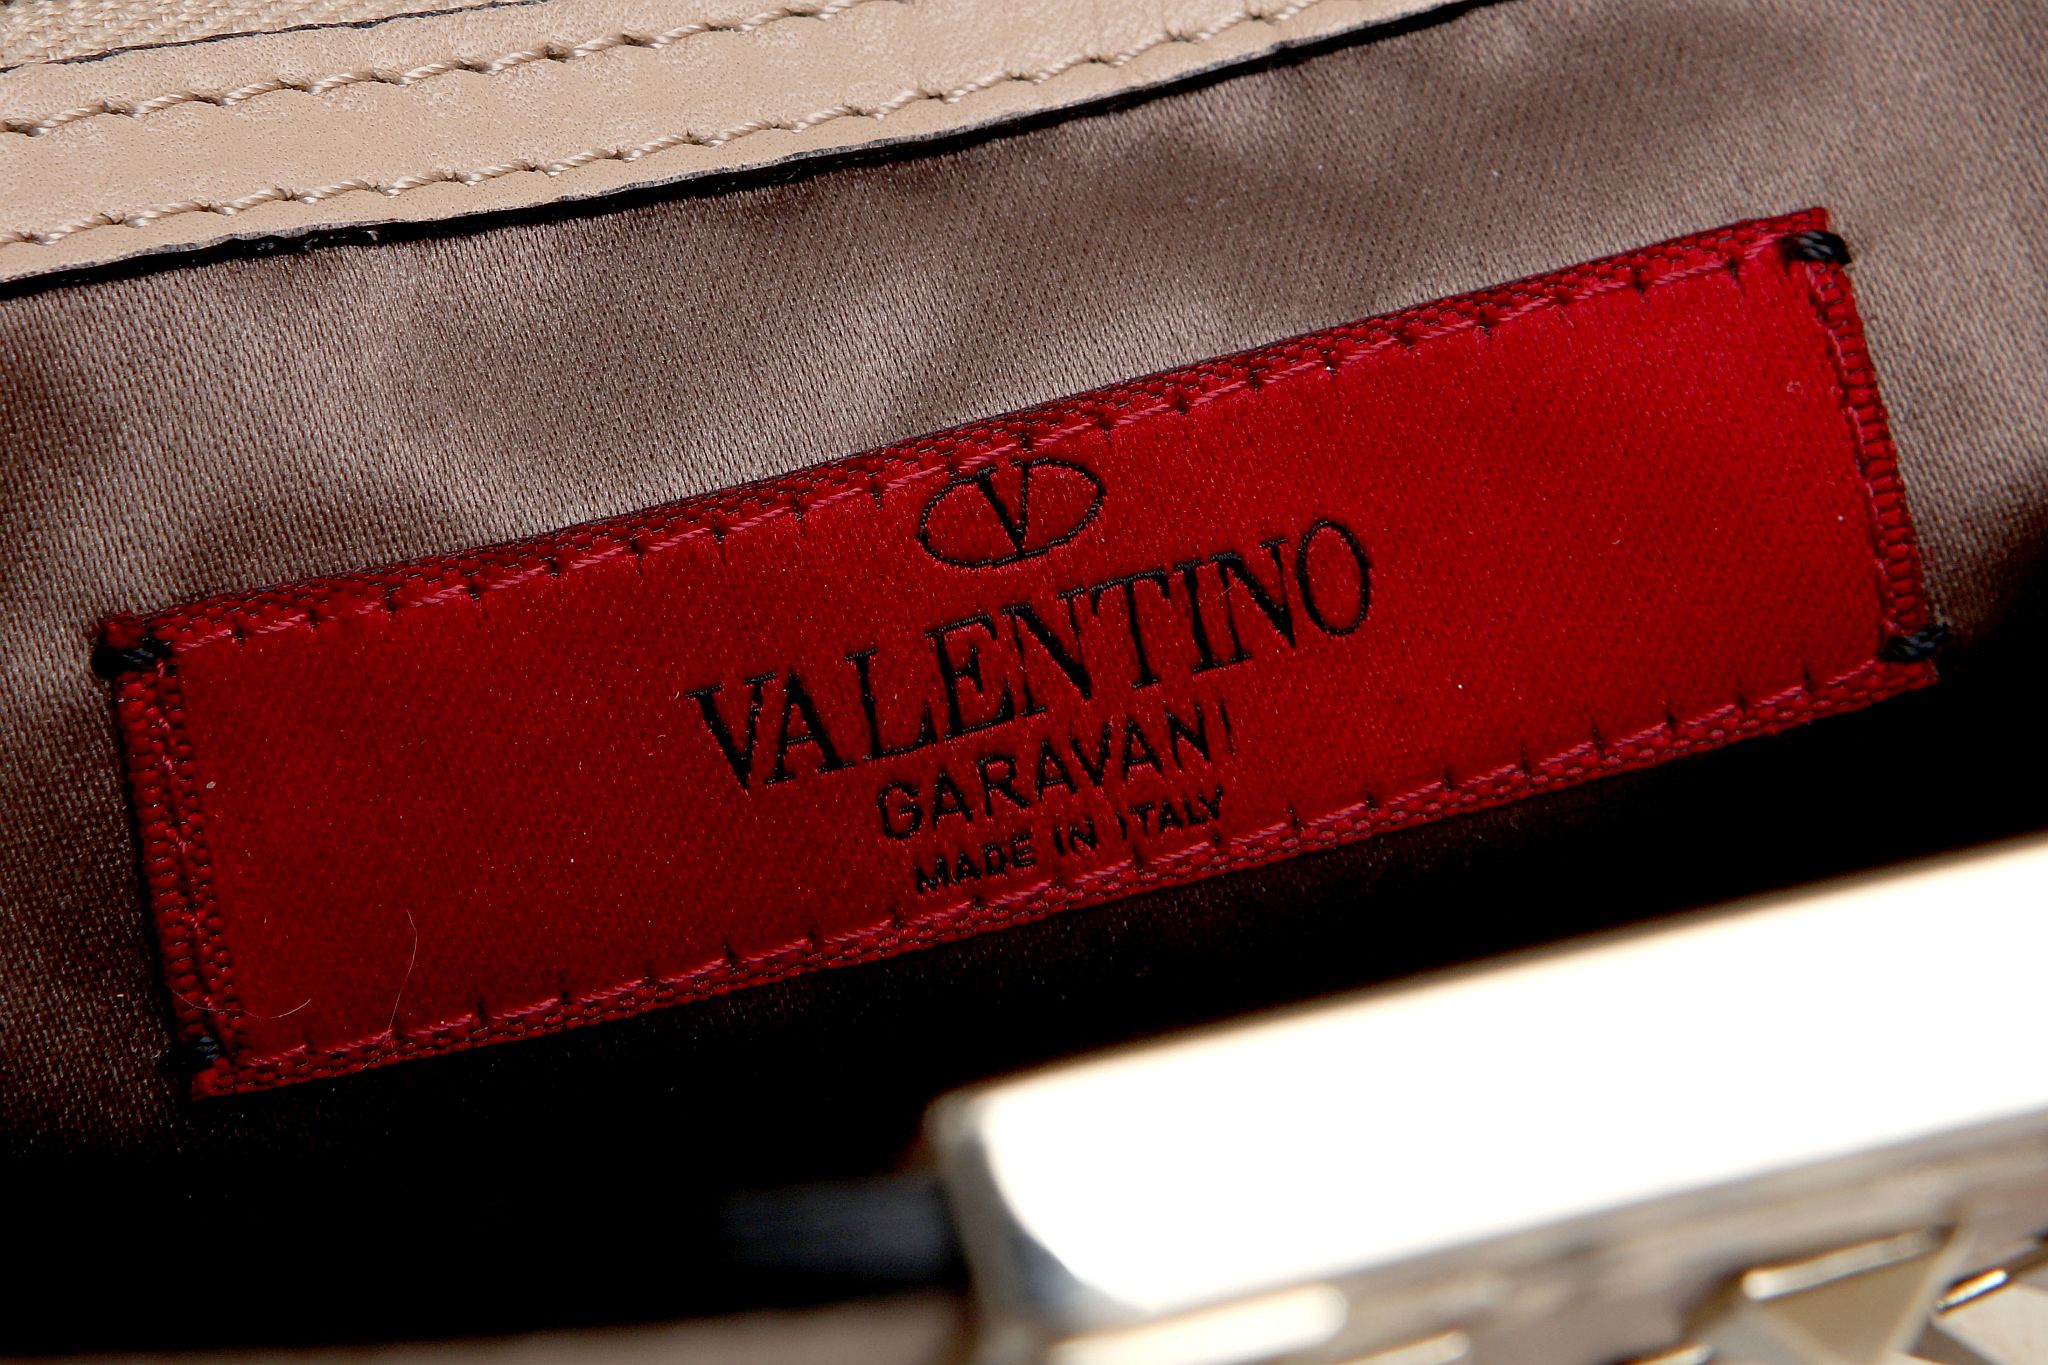 VALENTINO ROCKSTUD SHOULDER BAG, nude leather with all over chrome stud decoration, 32cm wide, - Image 10 of 12